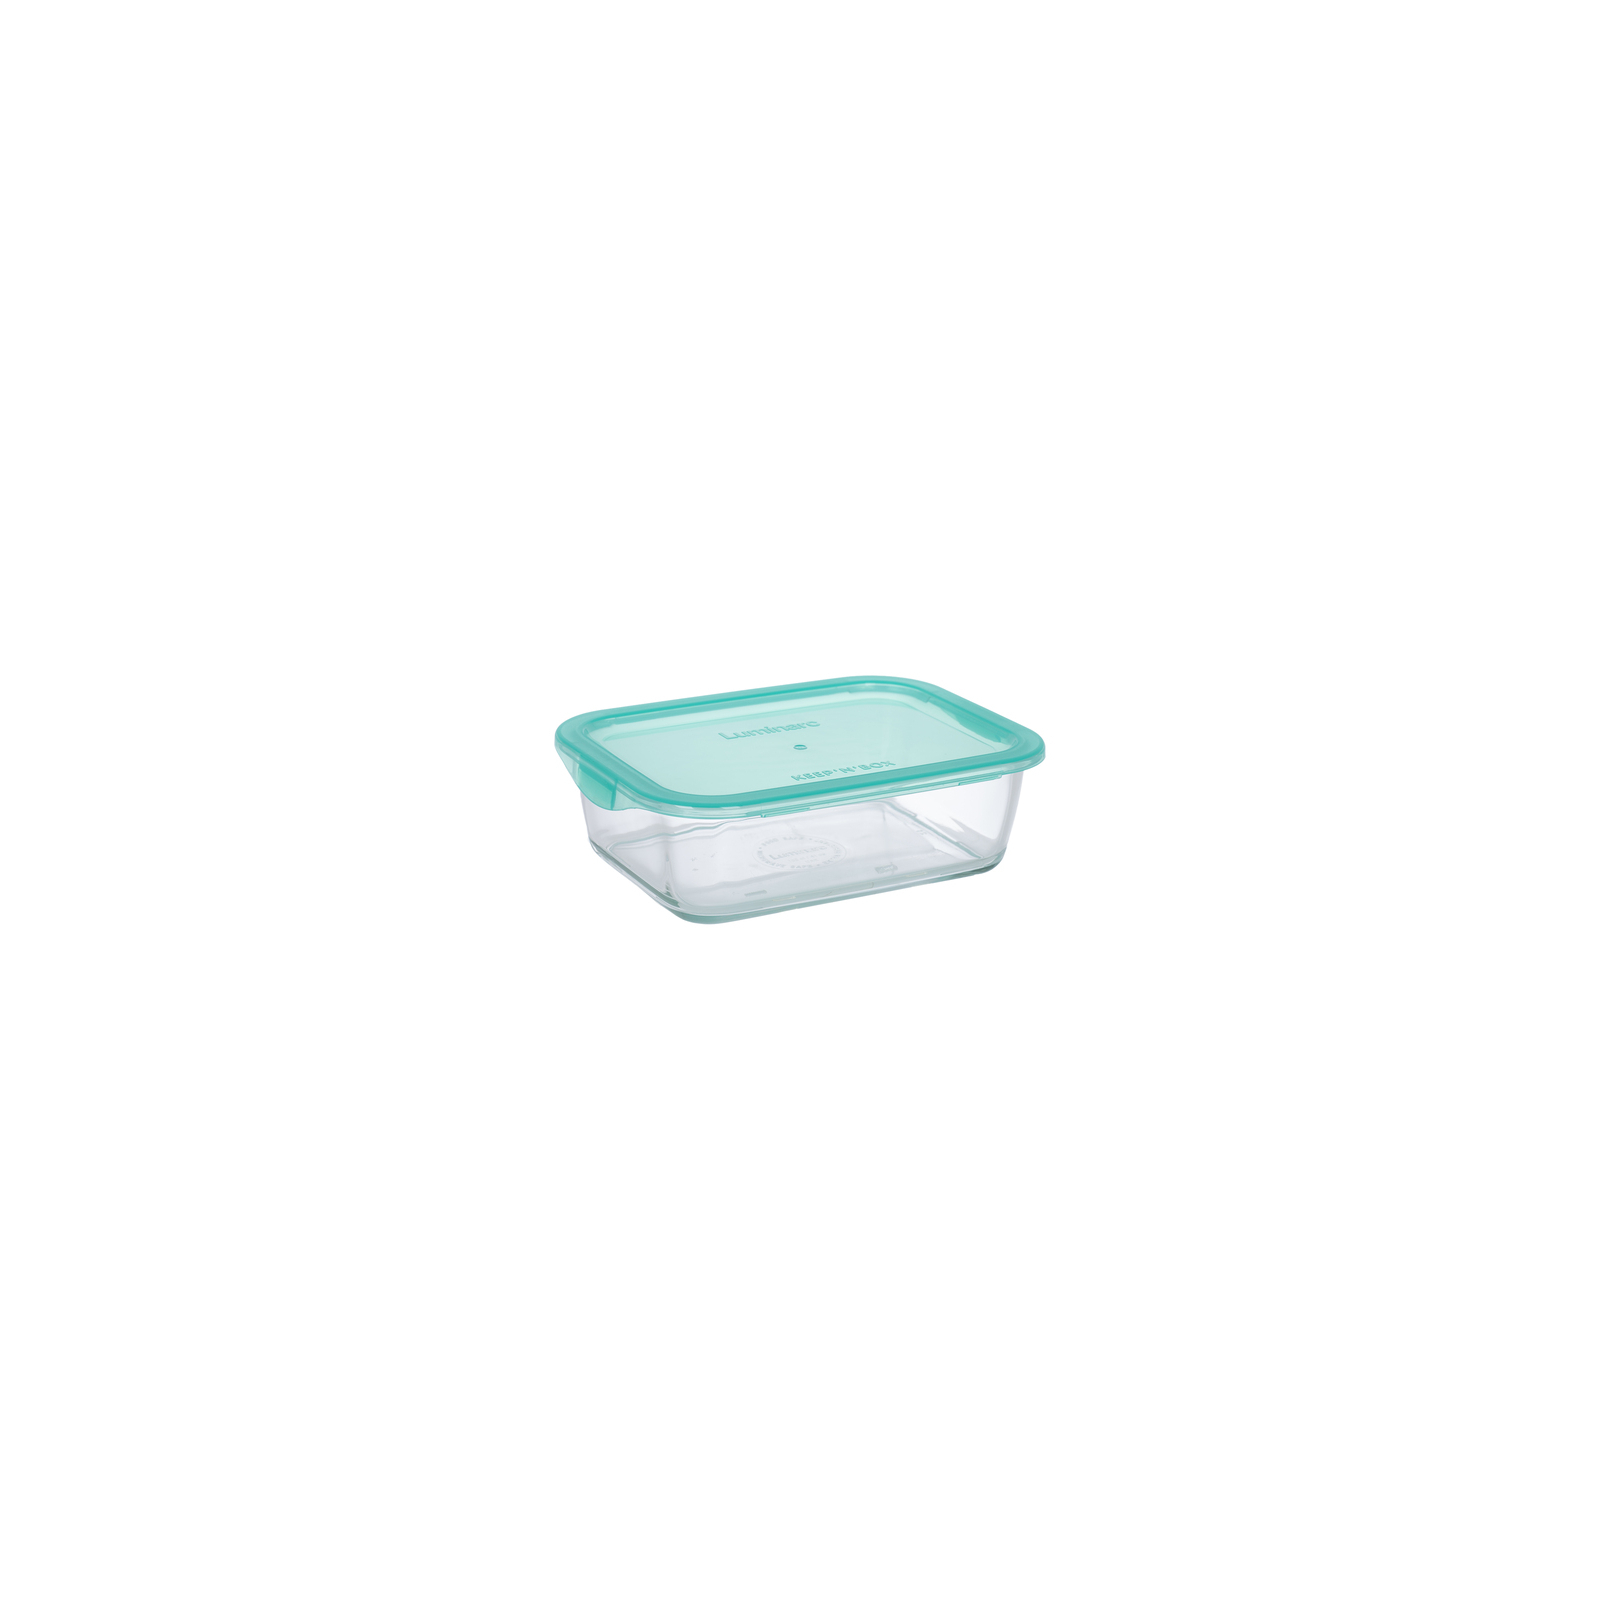 Пищевой контейнер Luminarc Keep'n Box Lagoon набор 3шт прямоуг. 380мл/820мл/1220мл + су (P6634) изображение 2